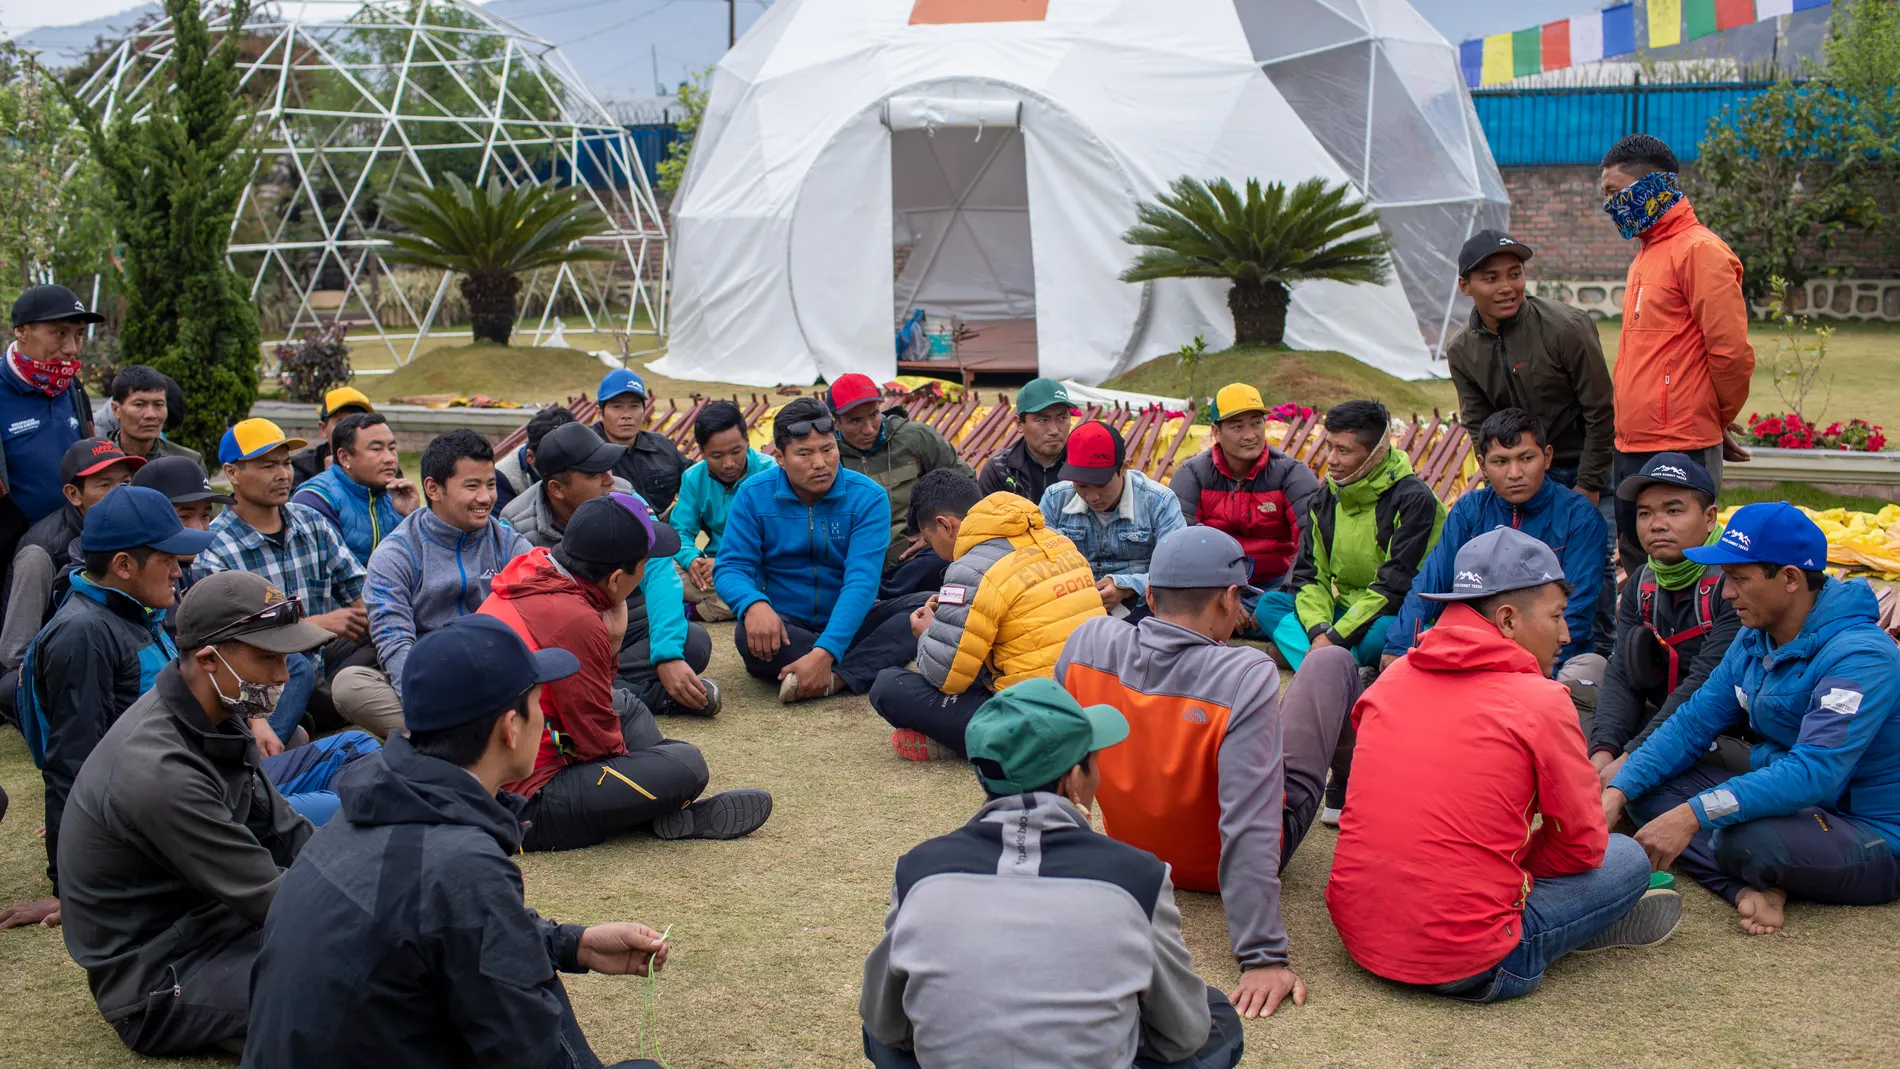 Mount Everest expedition shut down due to Coronavirus Outbreak